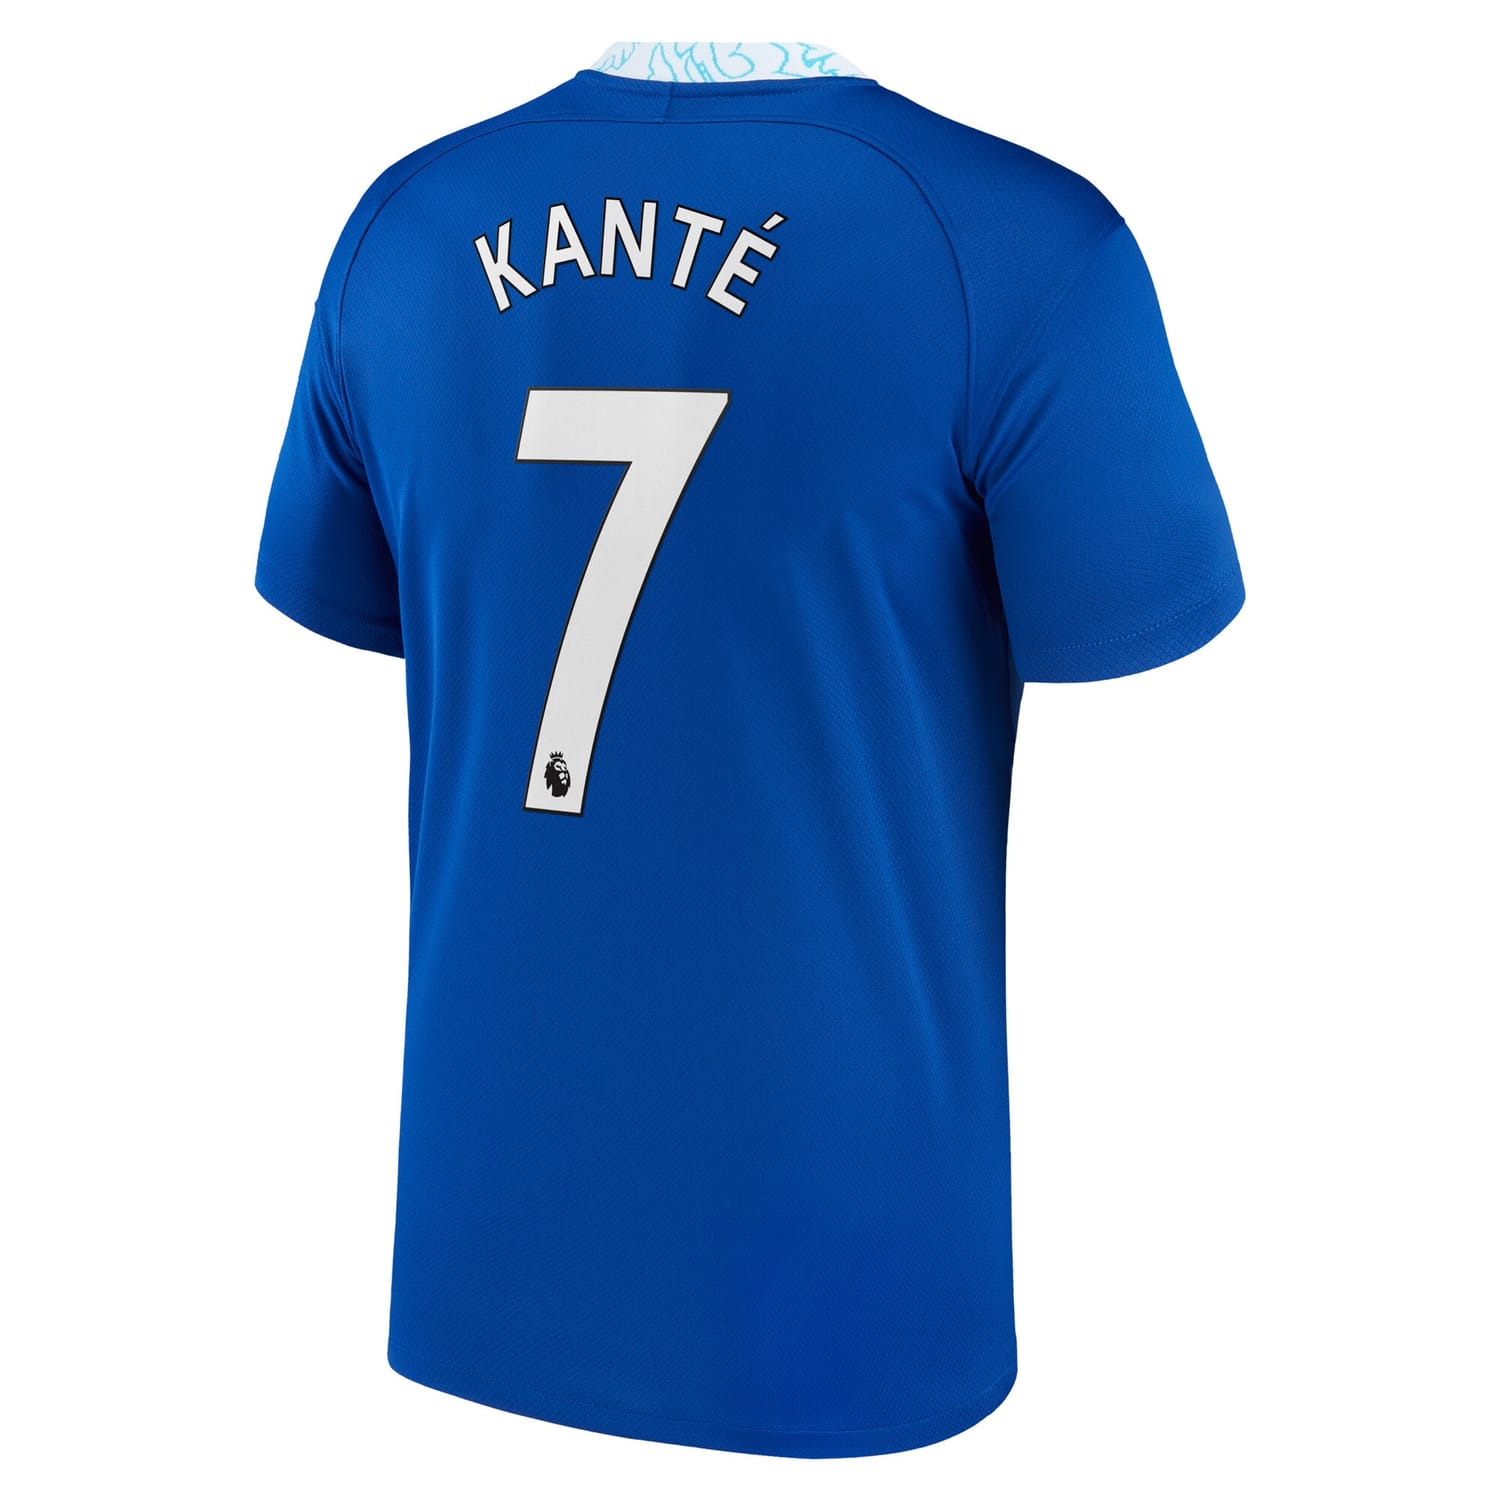 Premier League Chelsea Home Jersey Shirt Blue 2022-23 player N'Golo Kante printing for Men